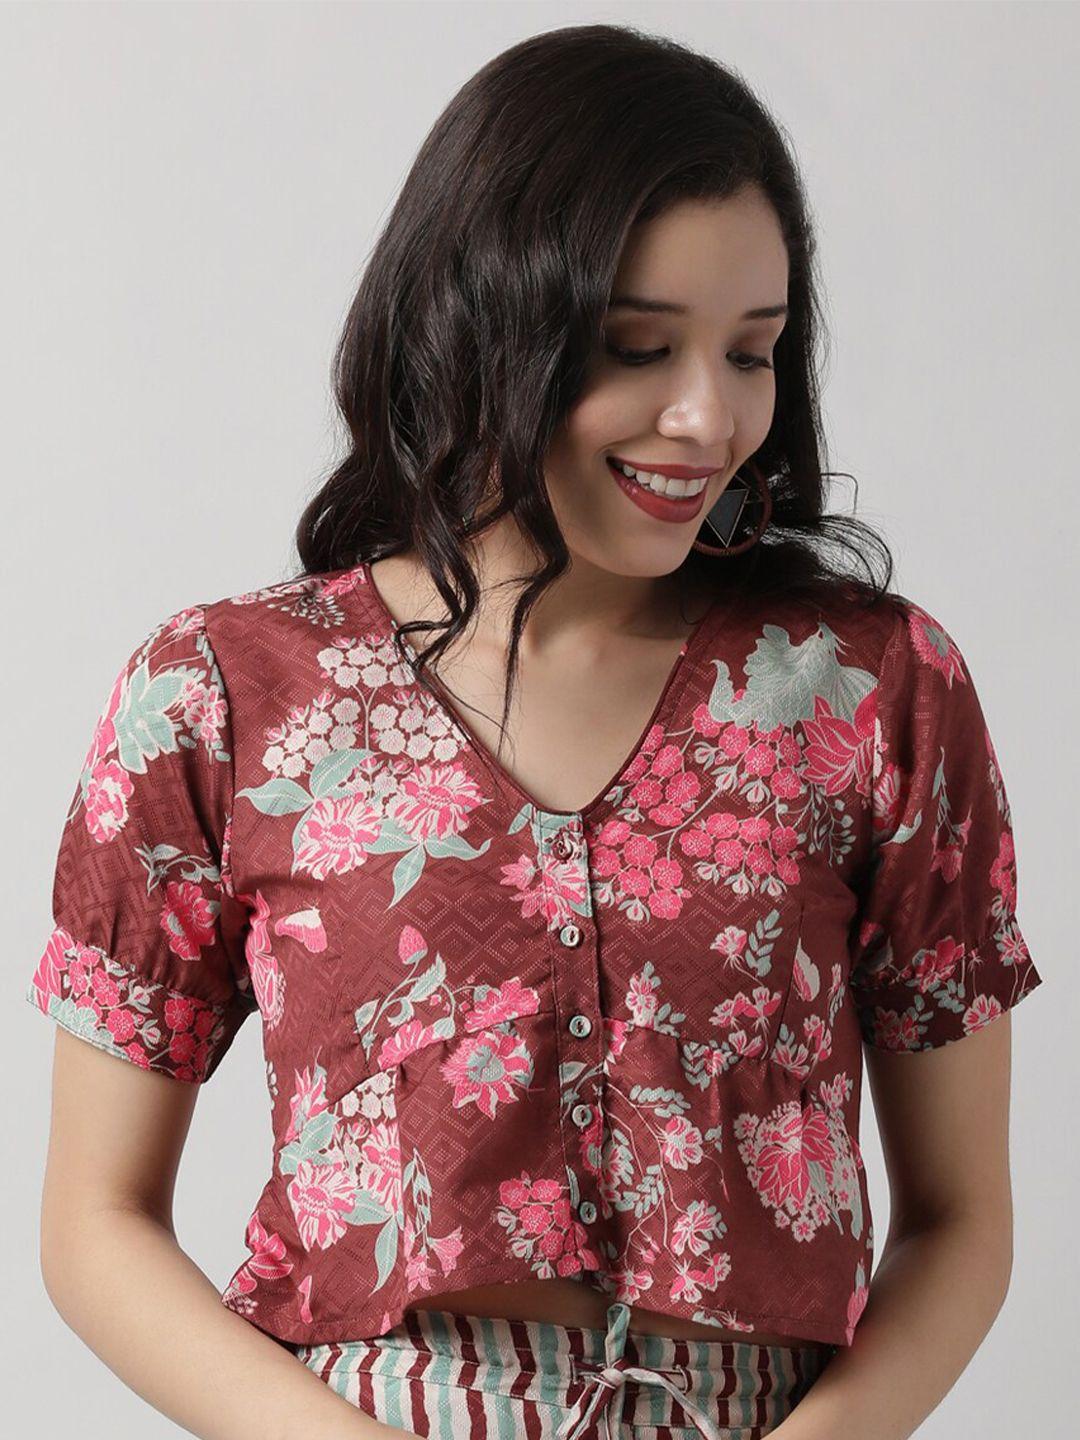 saaki brown floral print shirt style top